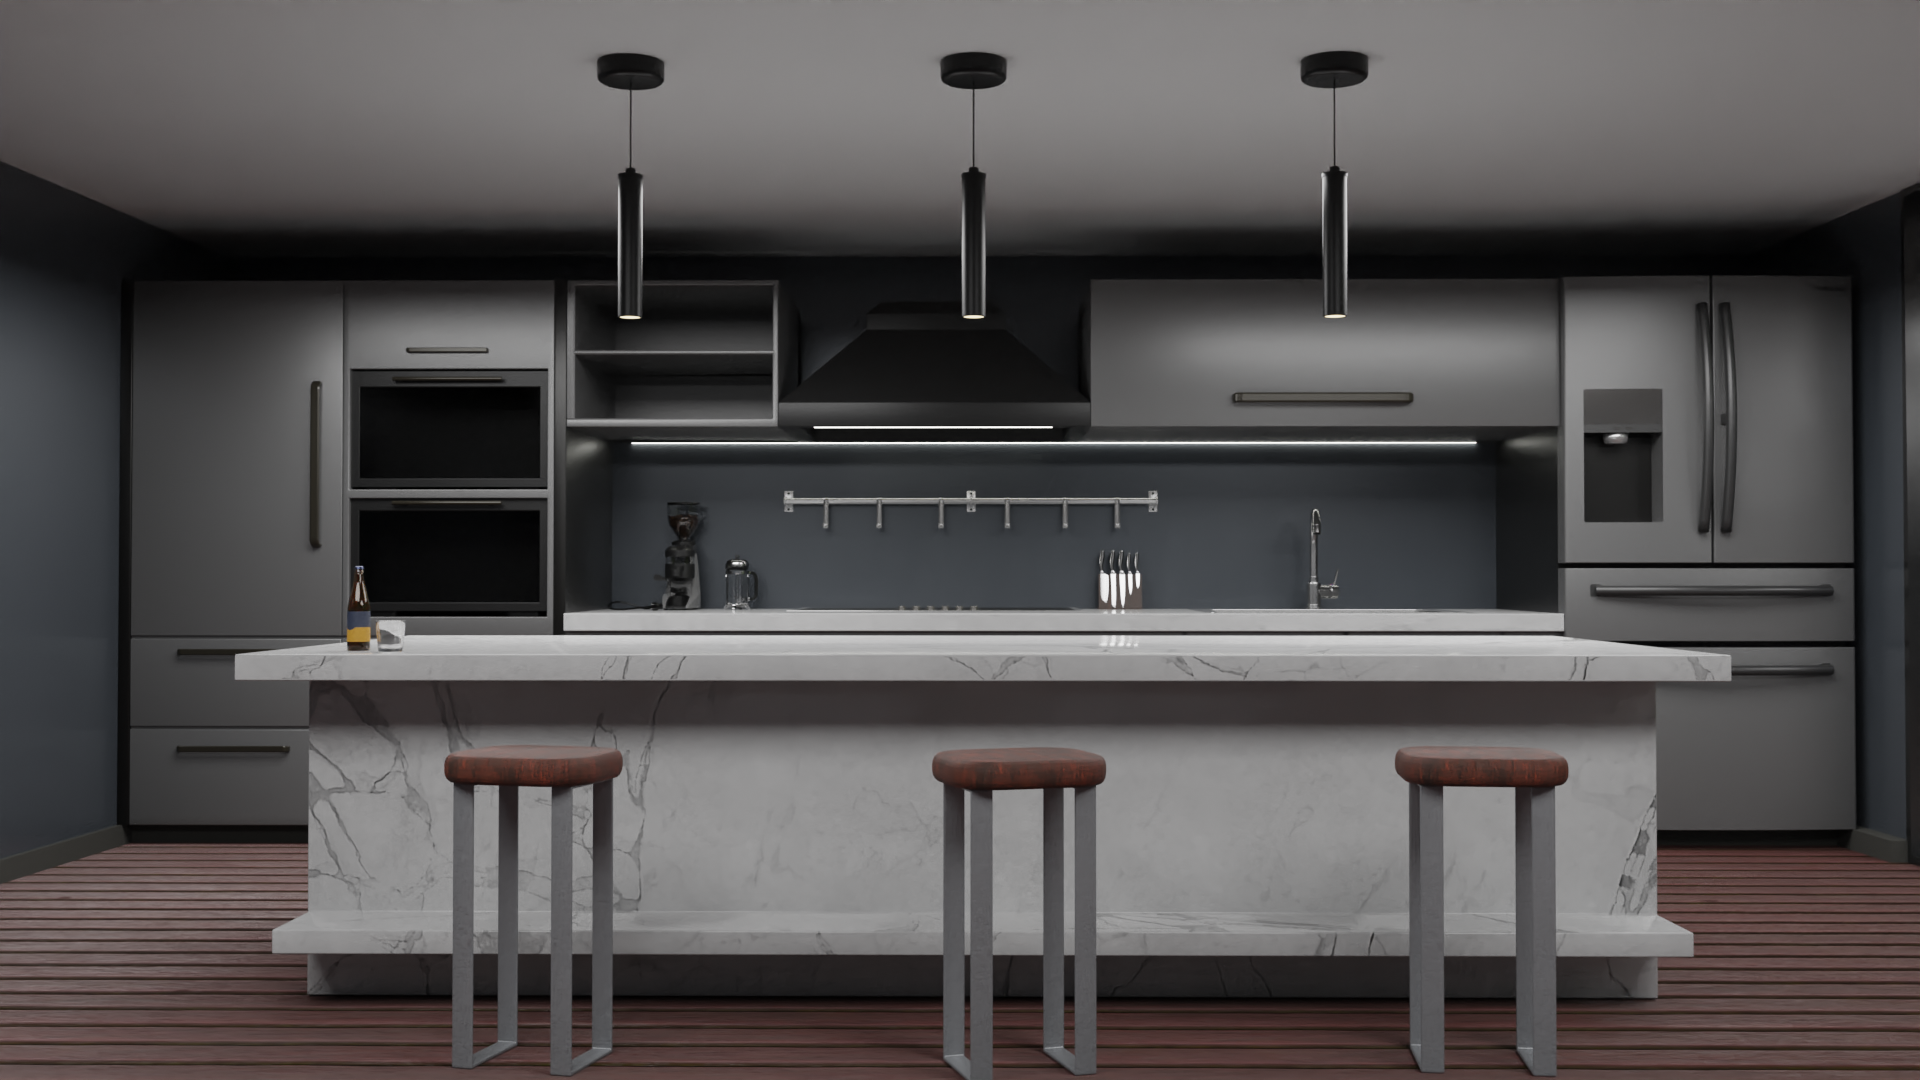 Kitchen interior design preview image 2